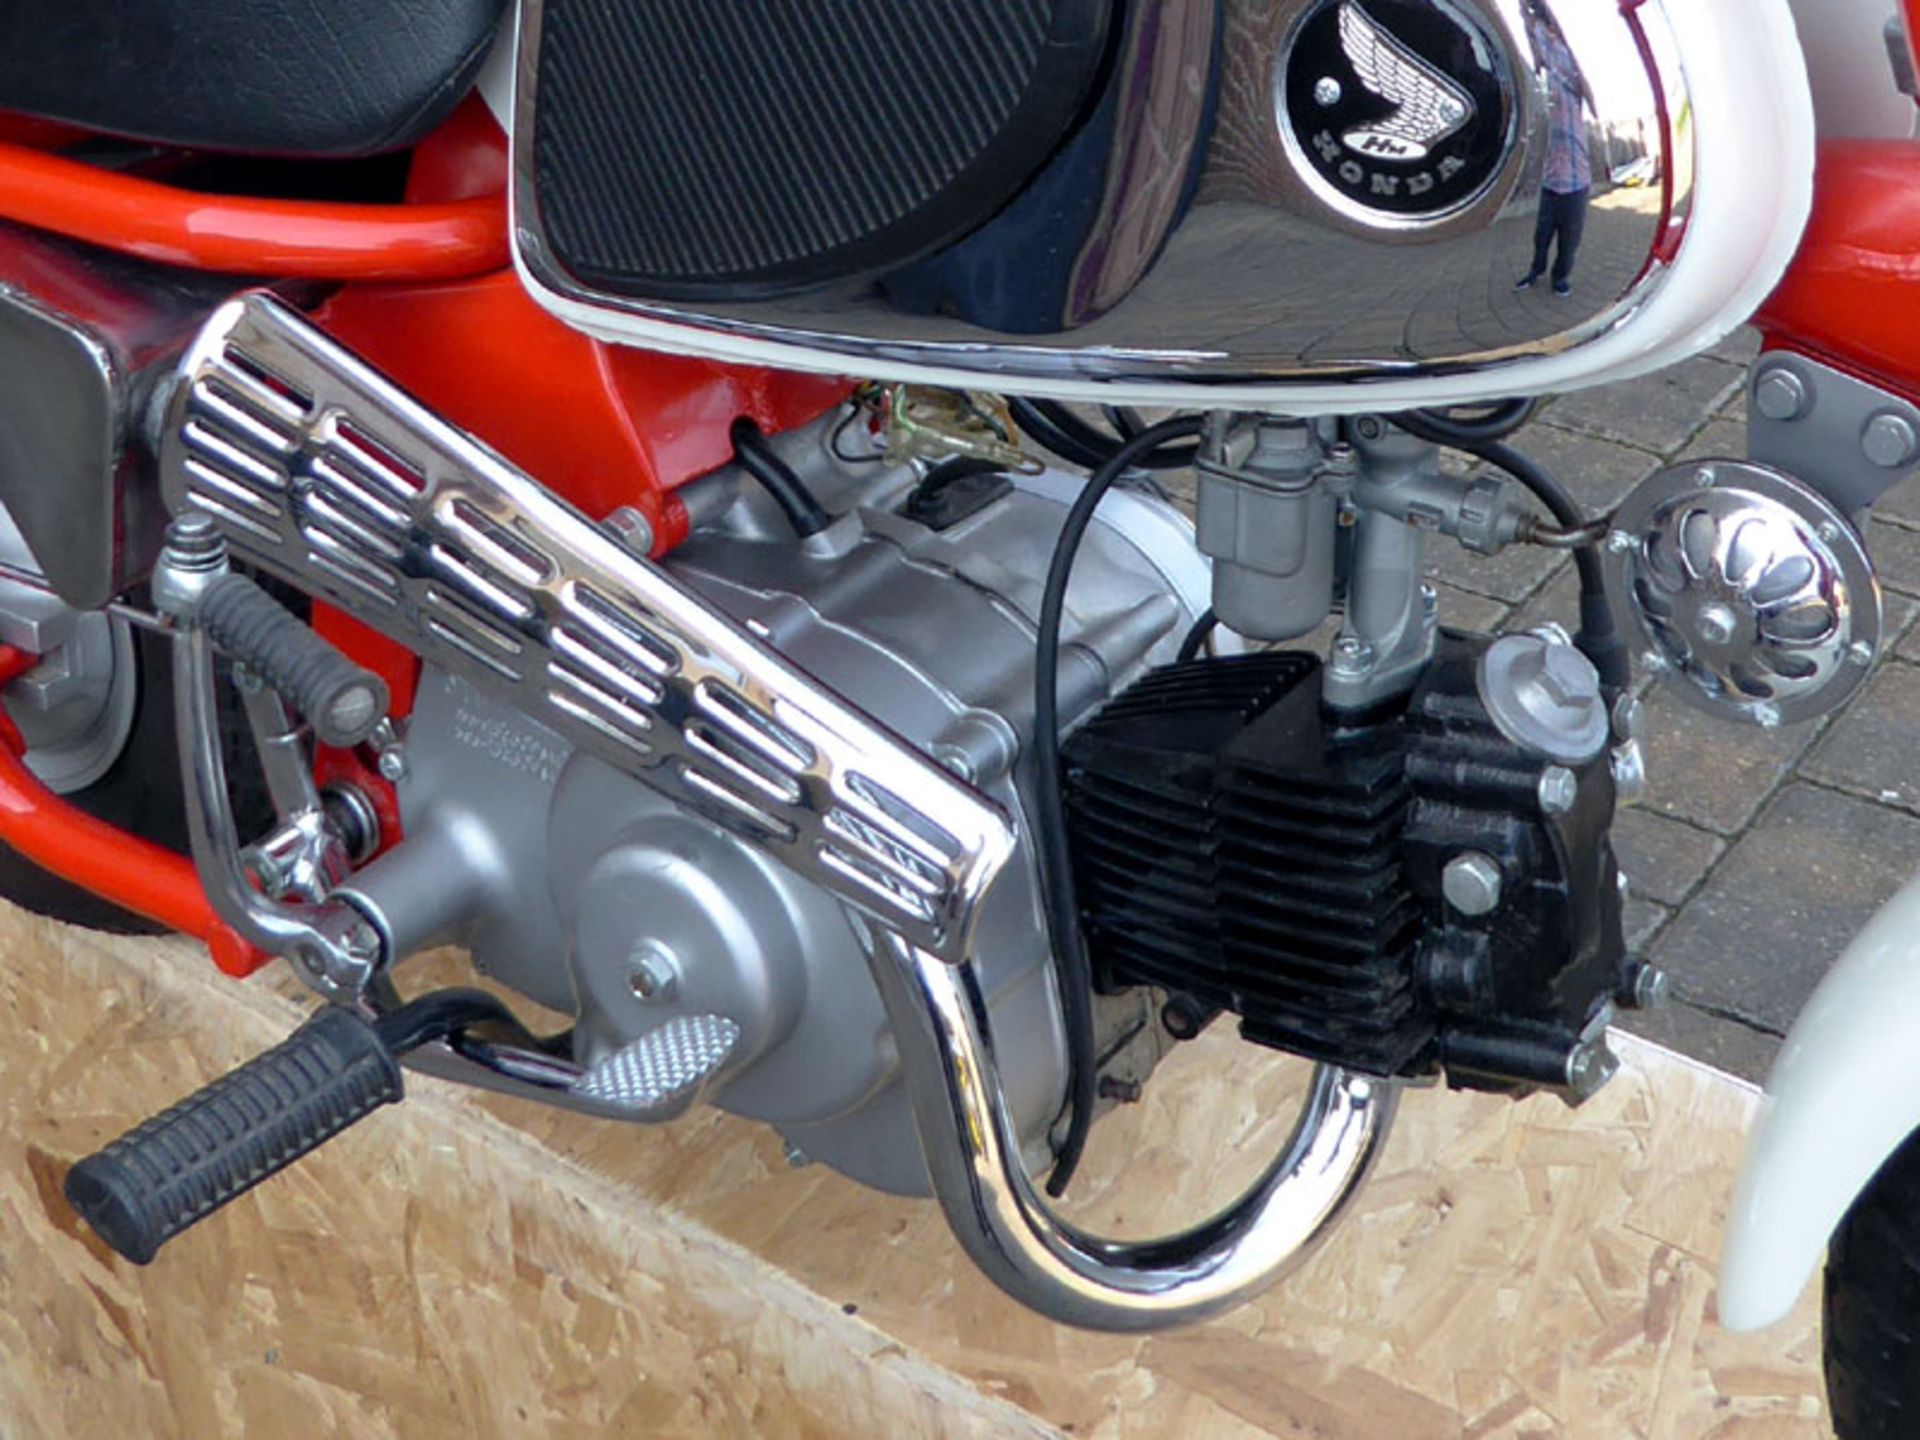 1964 Honda CZ100 - Image 2 of 2